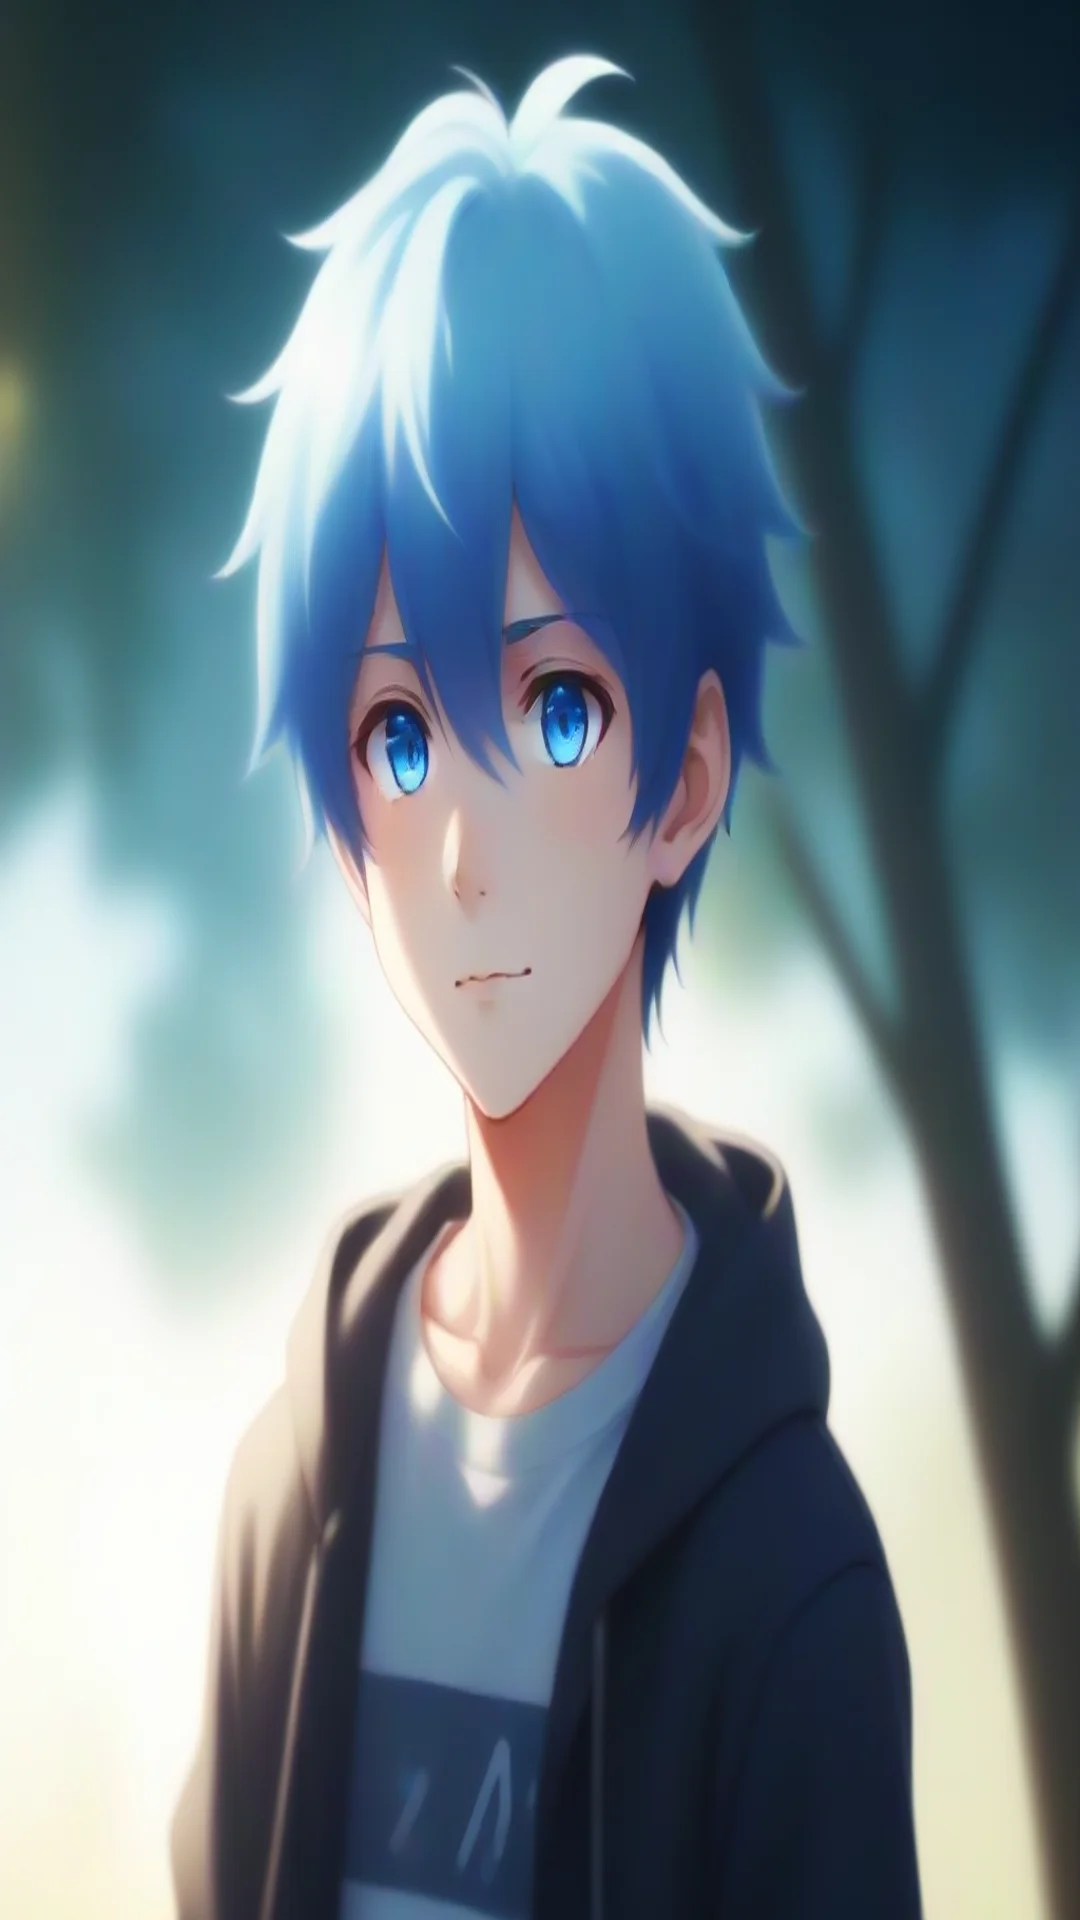 math sunlight simple anime boy blue hair bright blue eyes tall